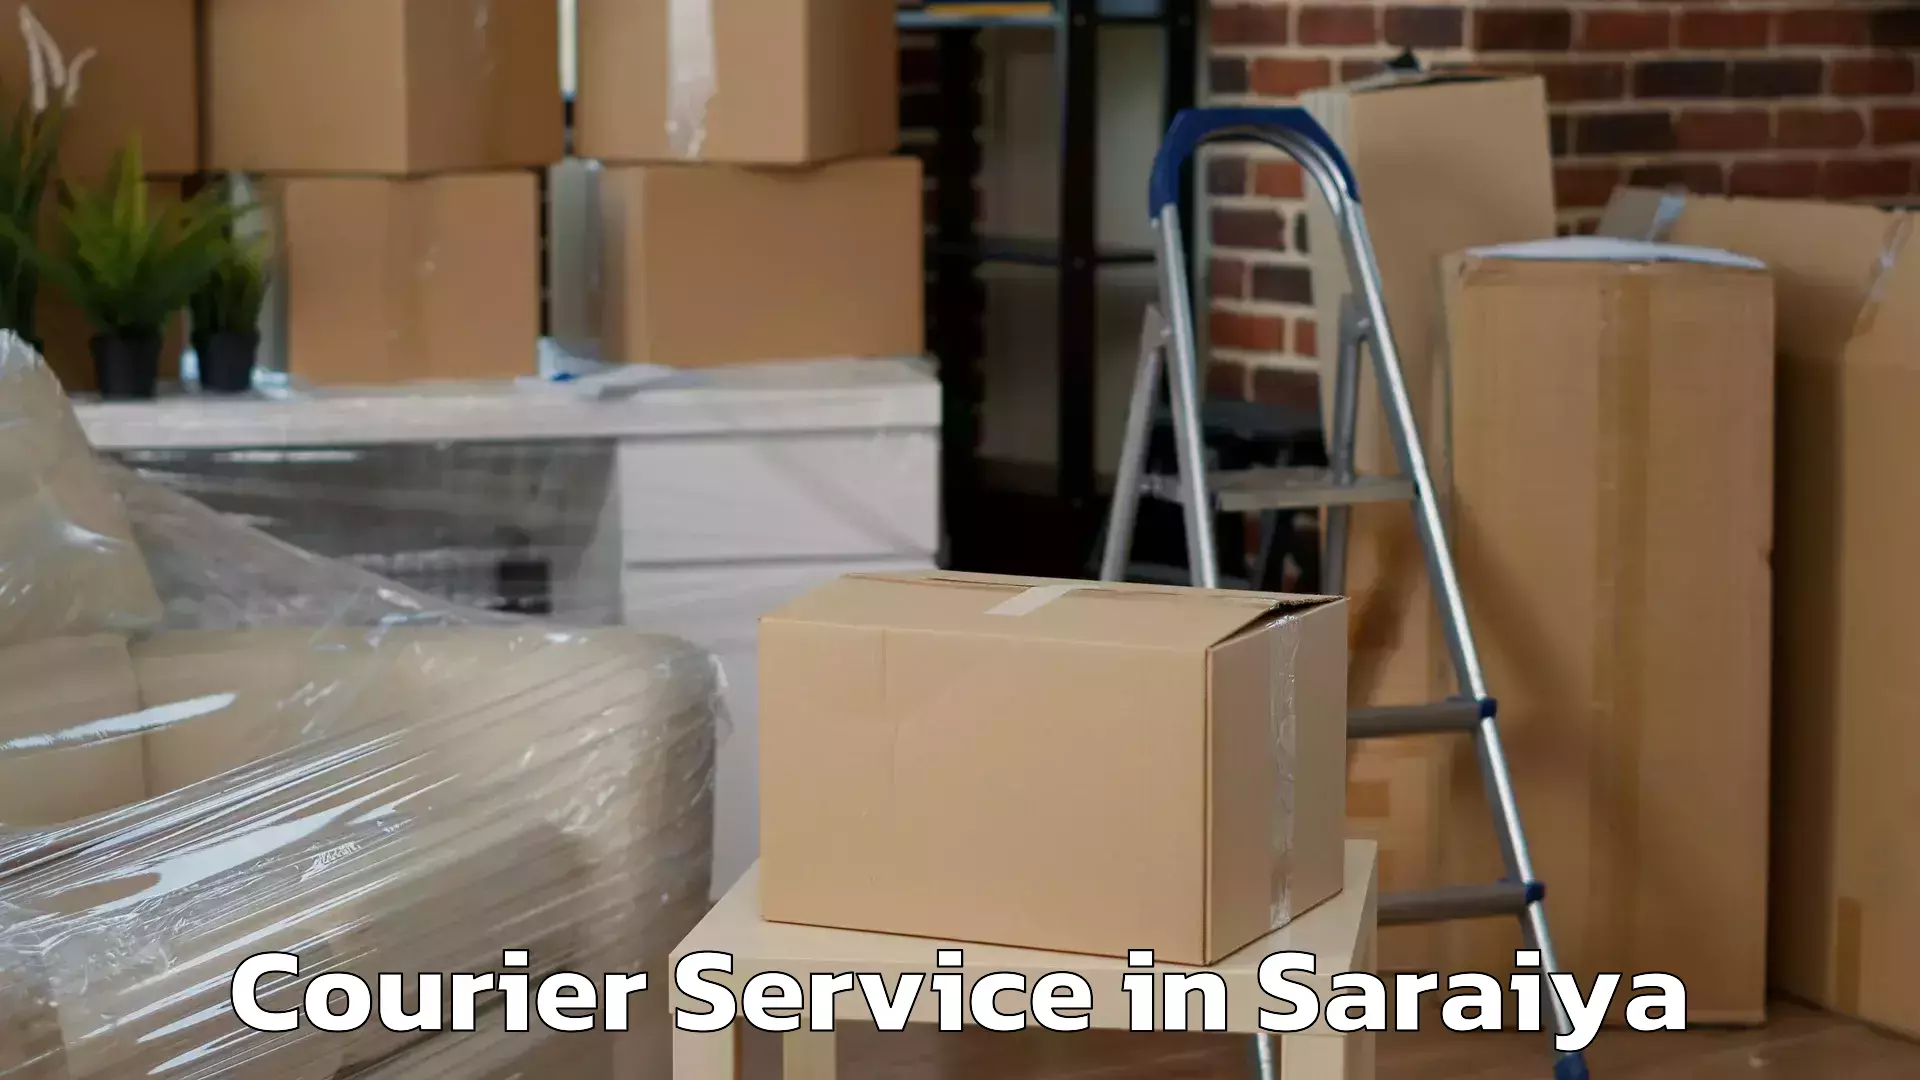 Regular parcel service in Saraiya